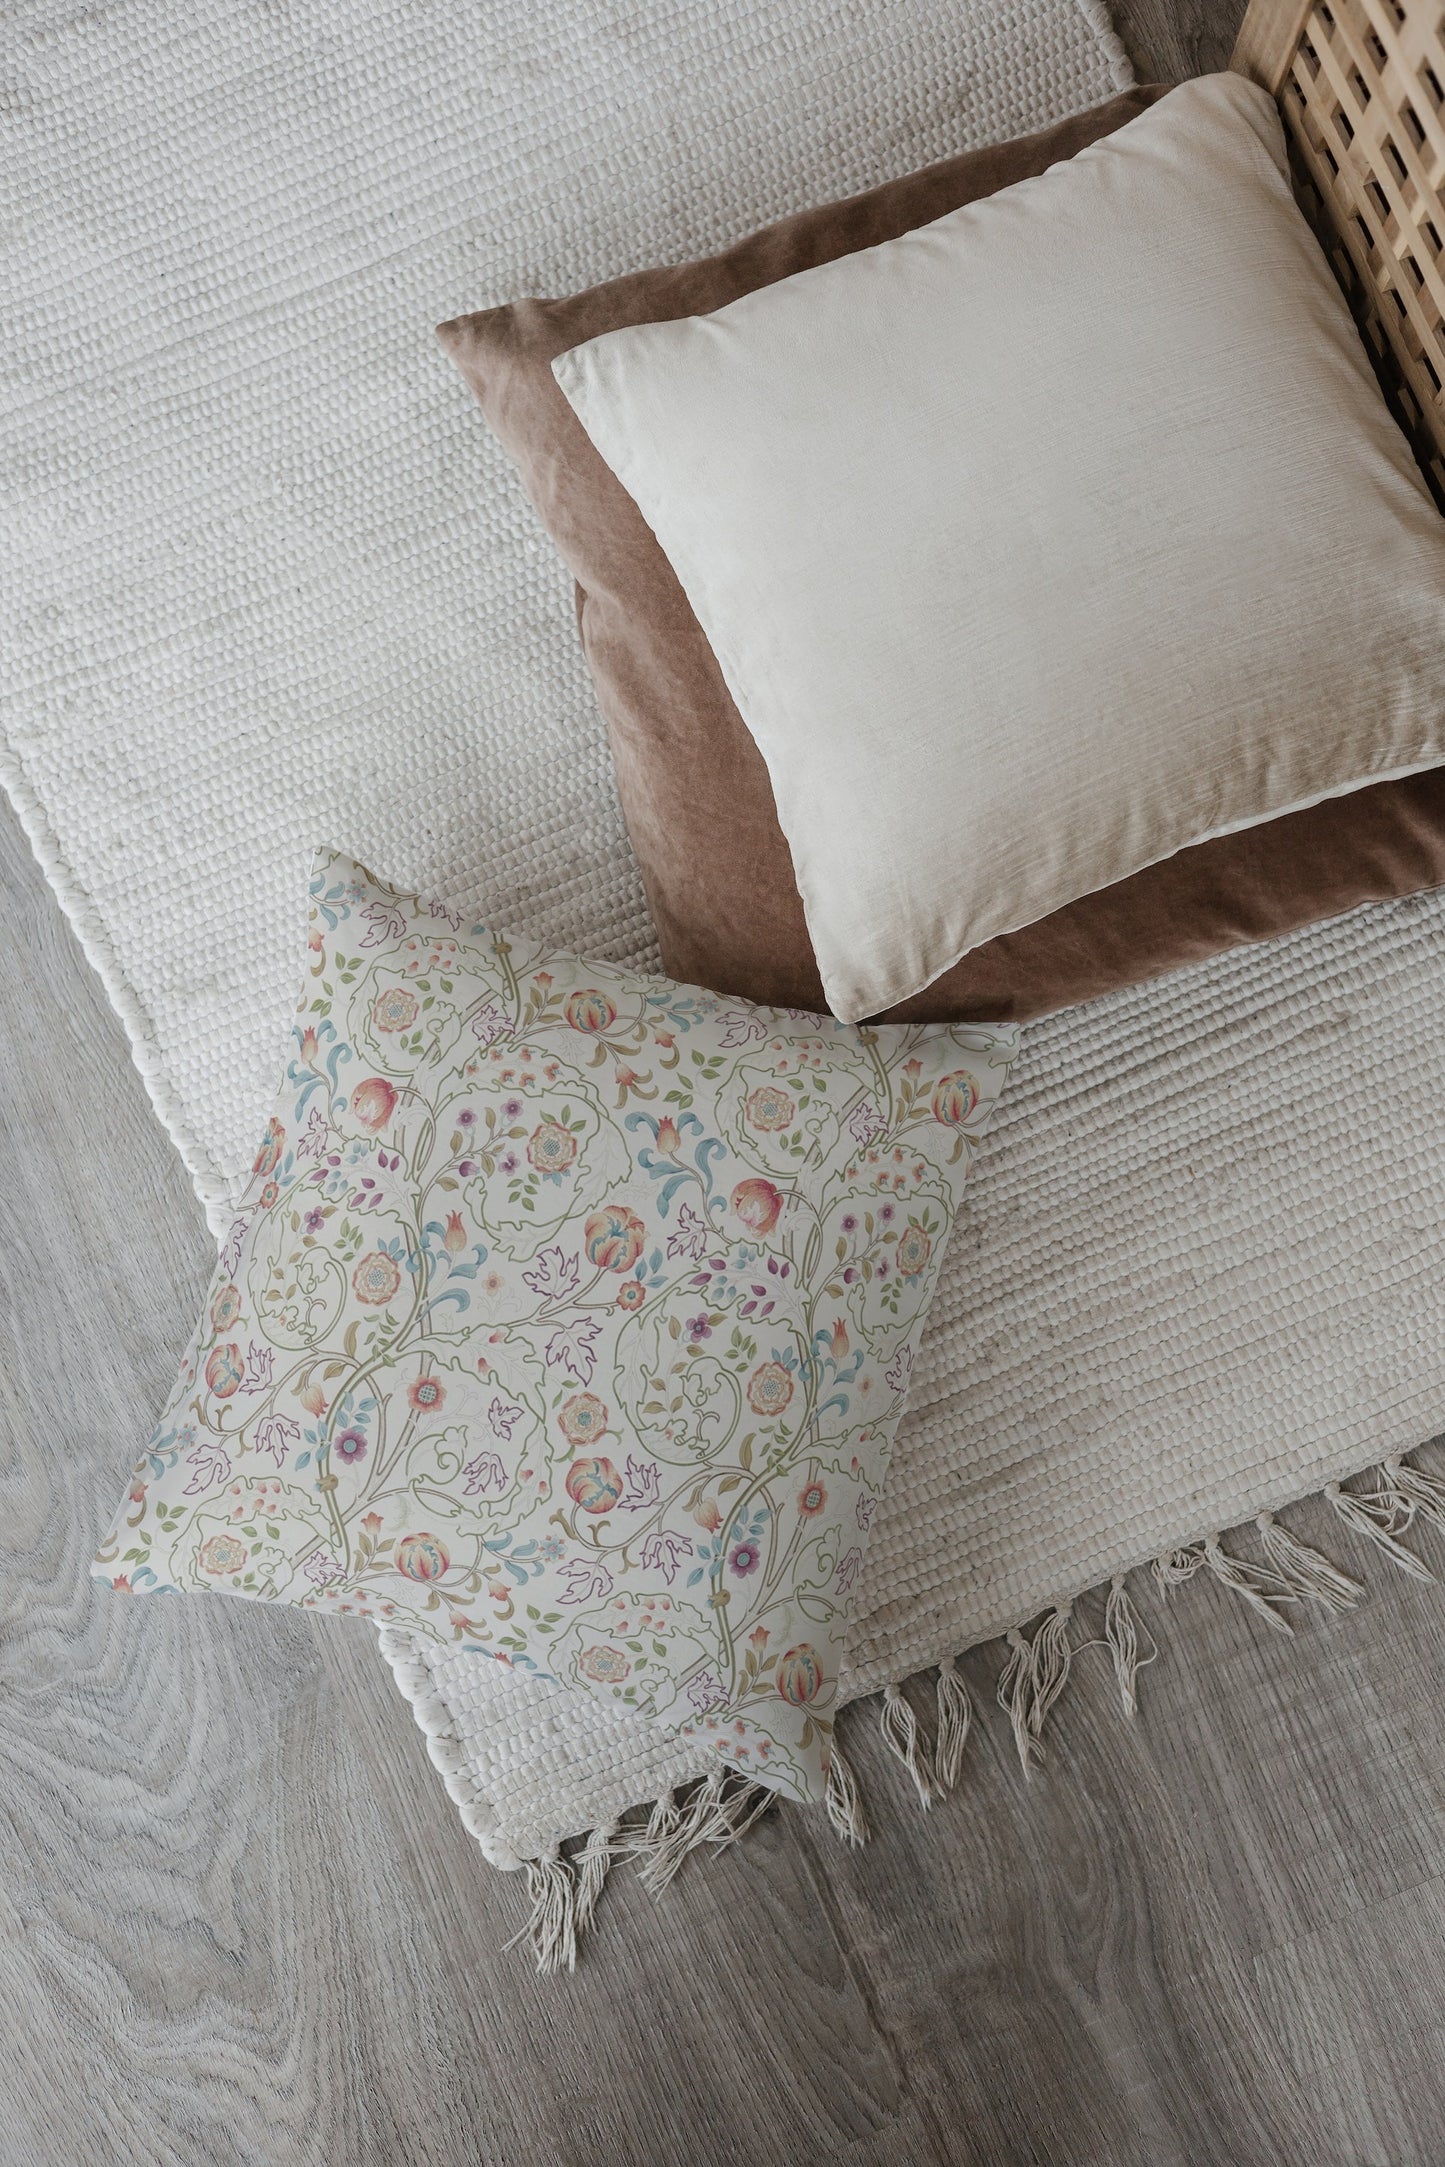 Mary Isobel Cotton Throw Pillows William Morris Soft Rose Artichoke